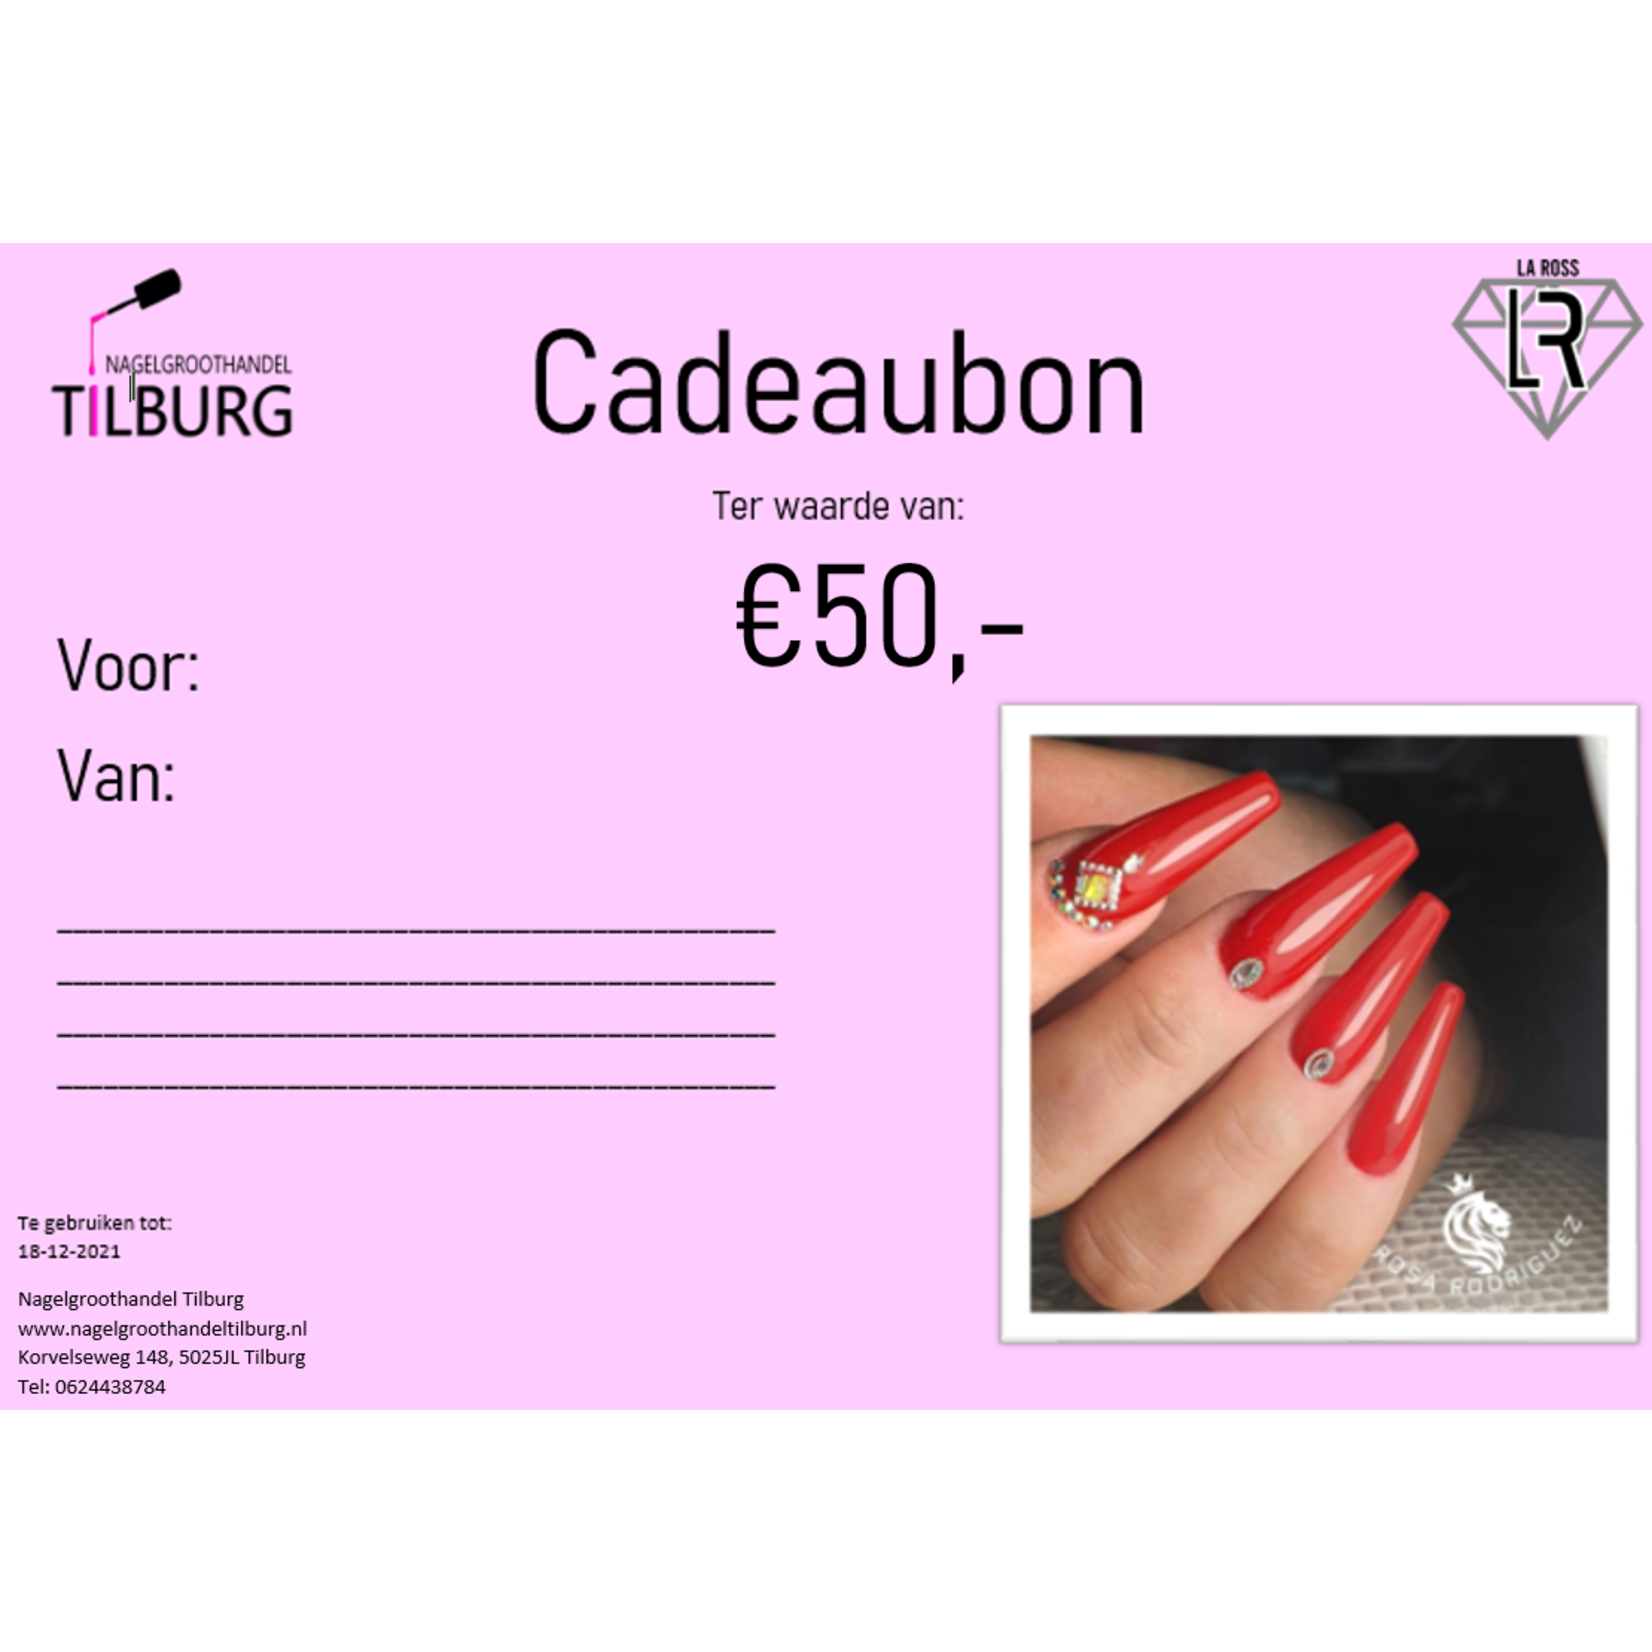 Nagelgroothandel Tilburg Cadeaubon - €50,-